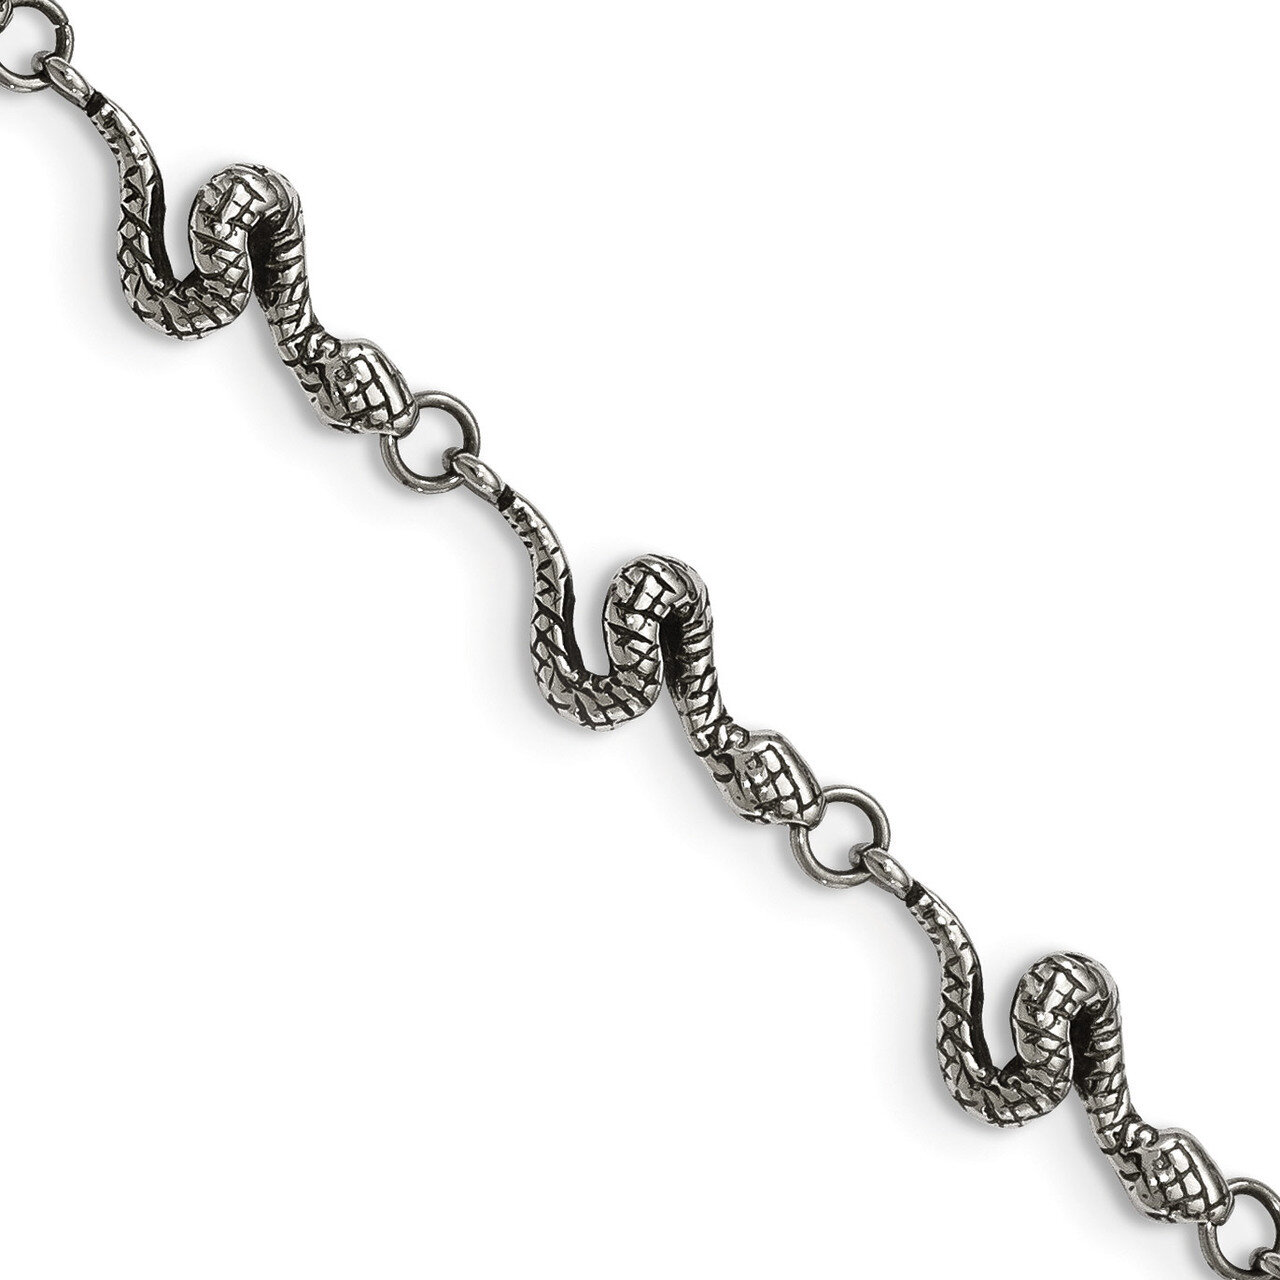 Antiqued and Polished Snake 7.25 Inch Bracelet Stainless Steel SRB1702-7.25